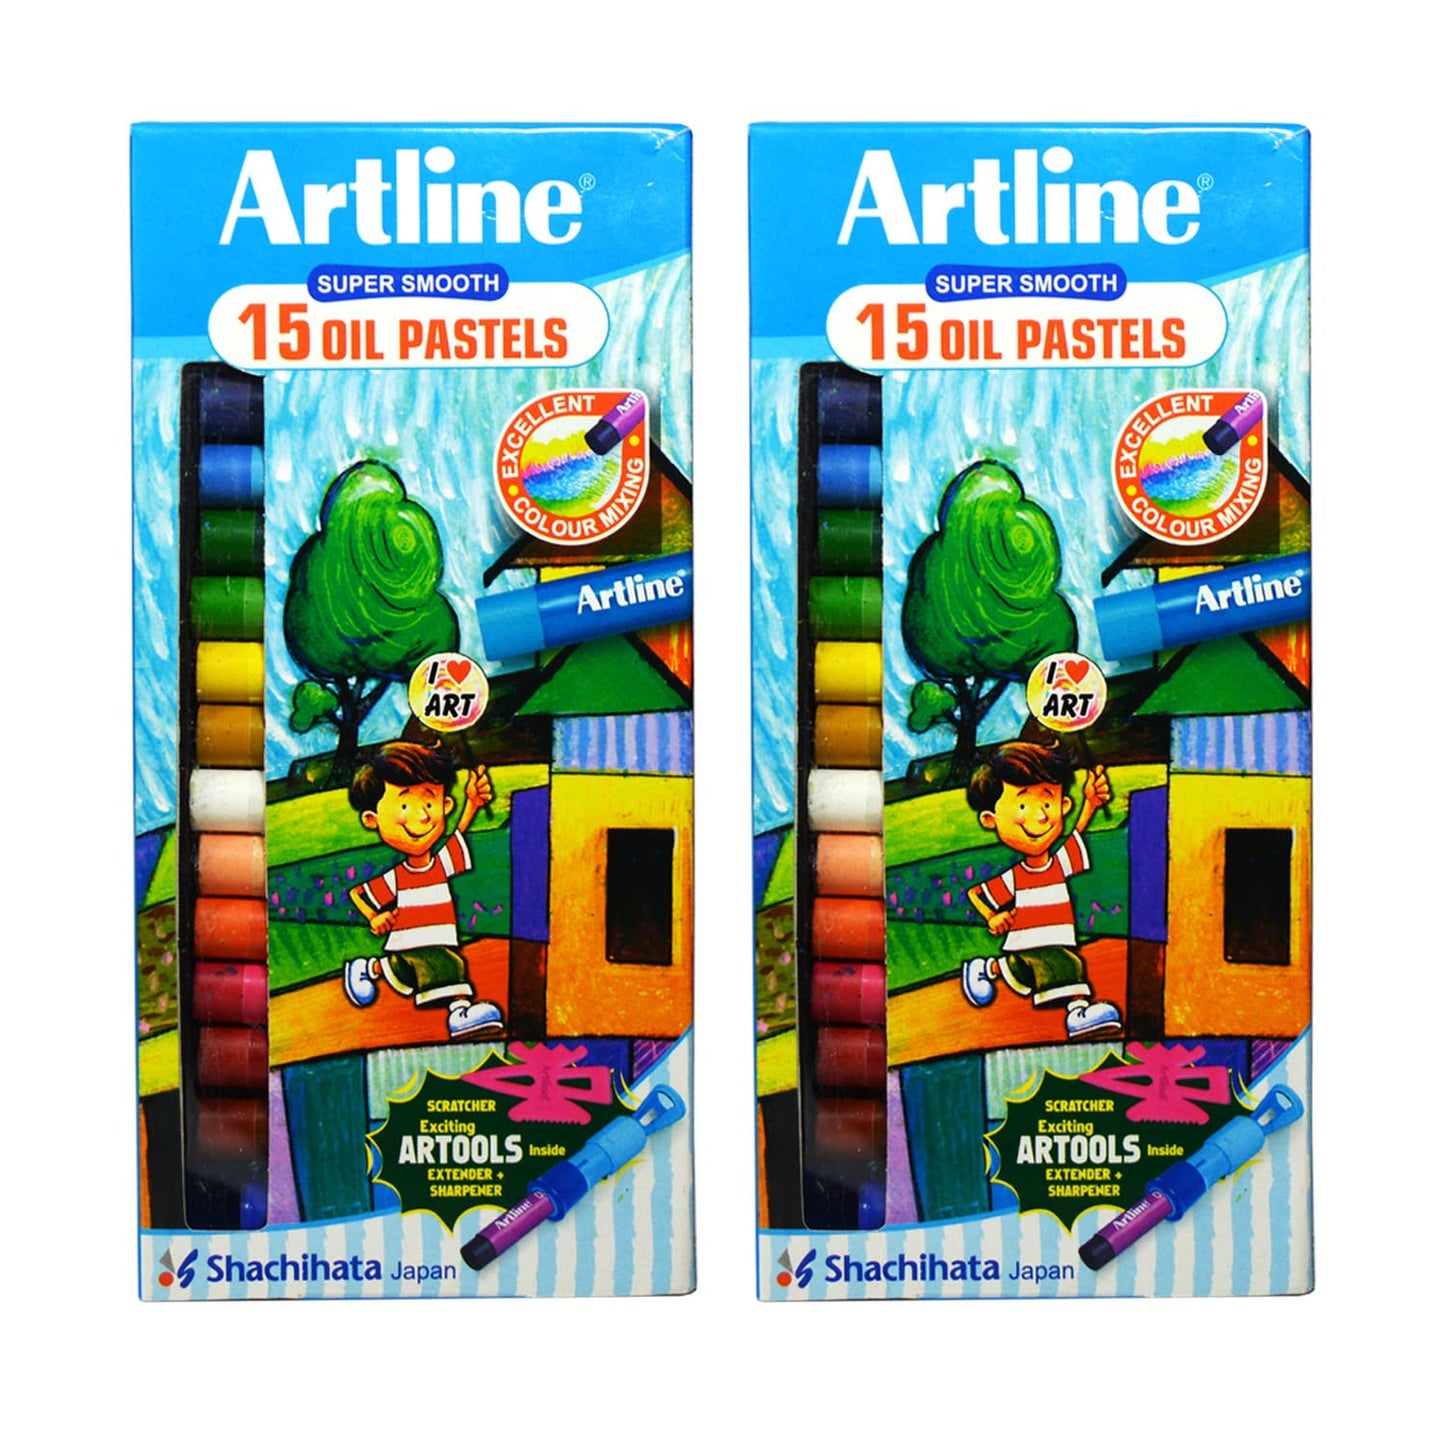 Artline Non-Toxic 15 Shades Oil Pastel